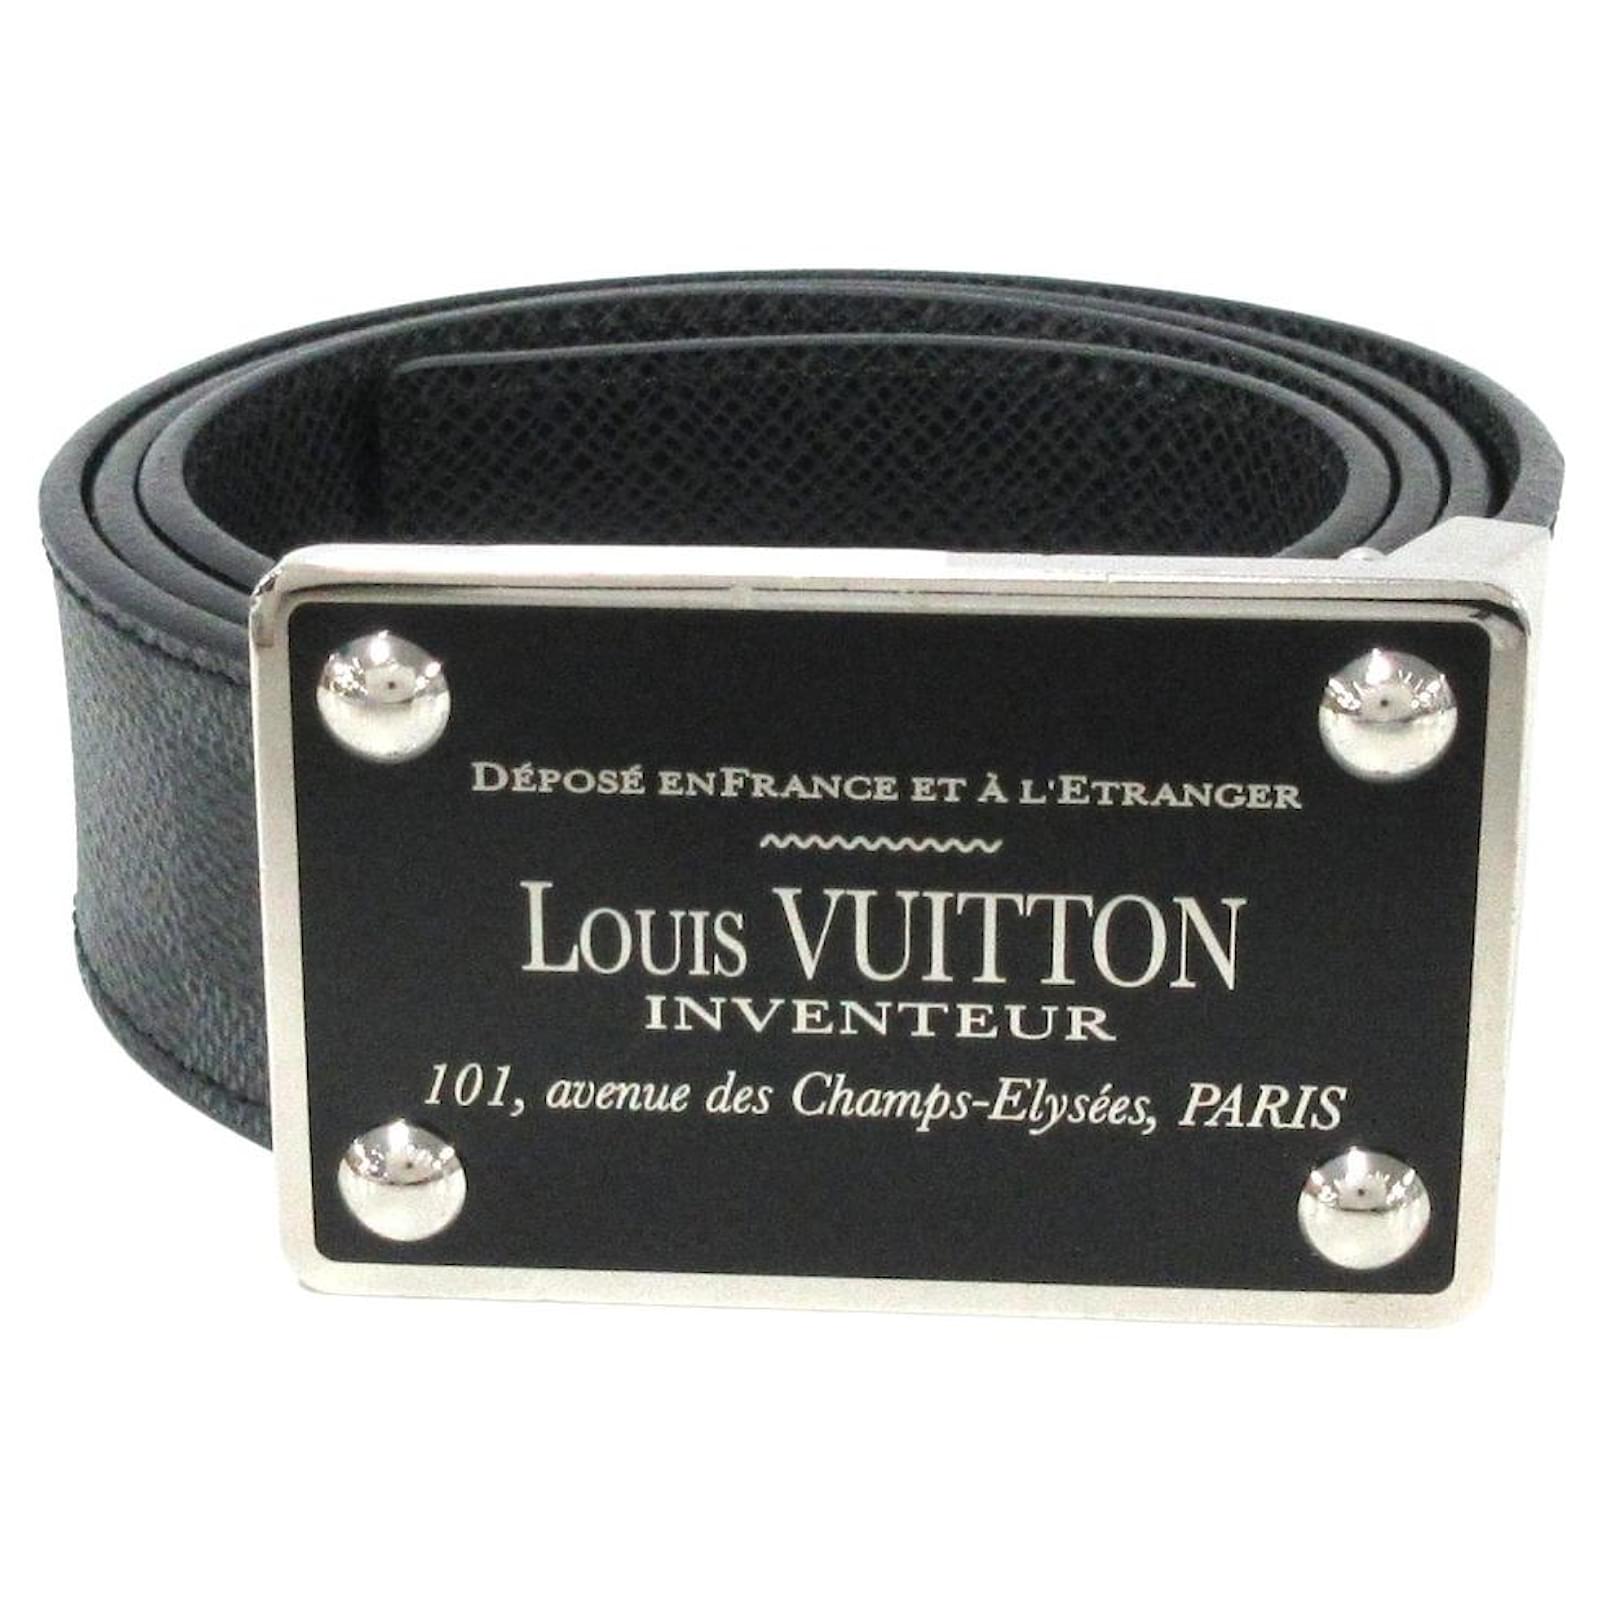 Cinture Louis vuitton in Tela Grigio taglia 95 cm - 29450999